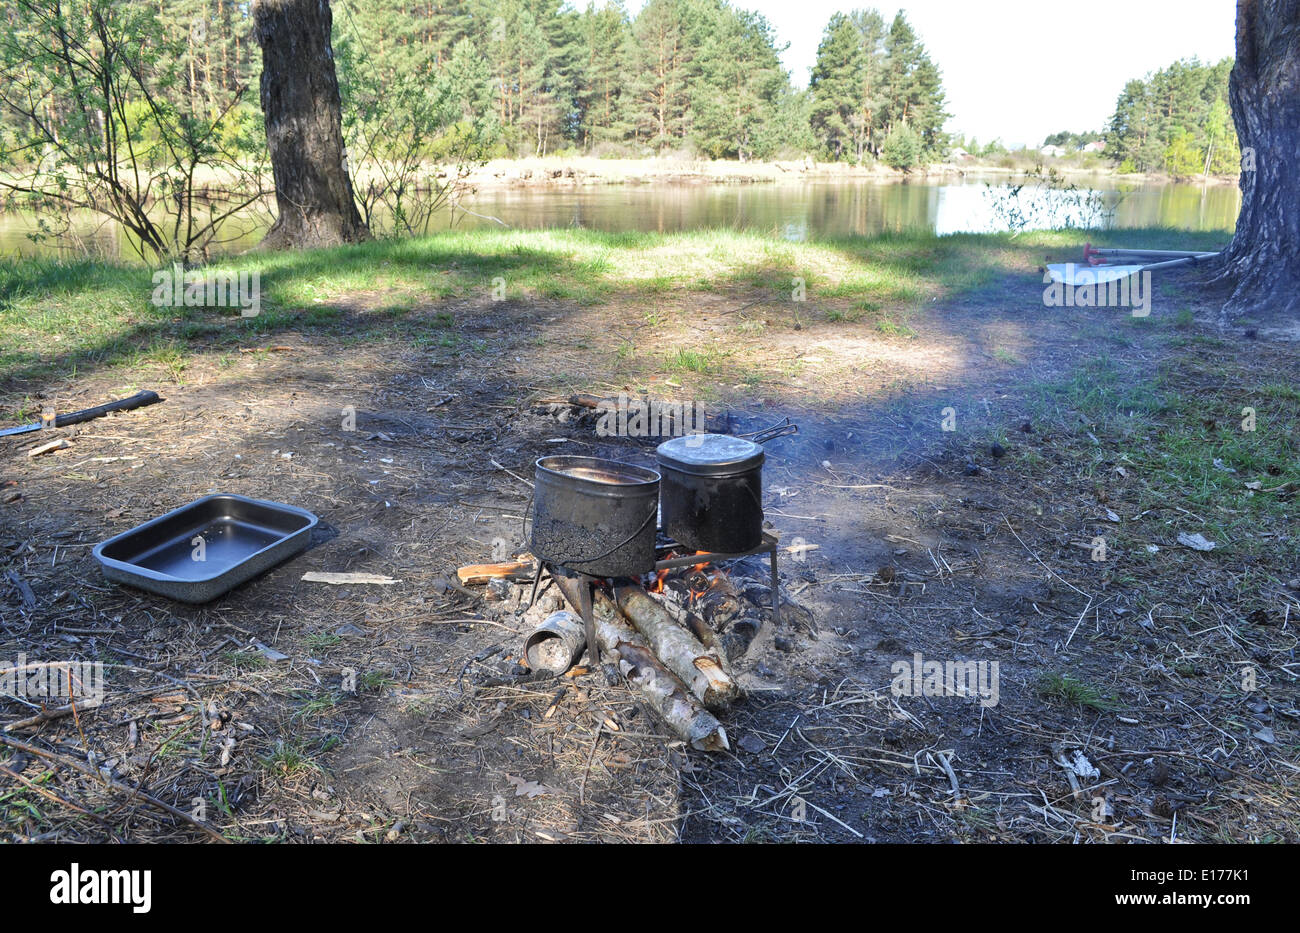 National Park 'Meshchera', Ryazan region, Russian Federation. Cooking on camp fire. Stock Photo